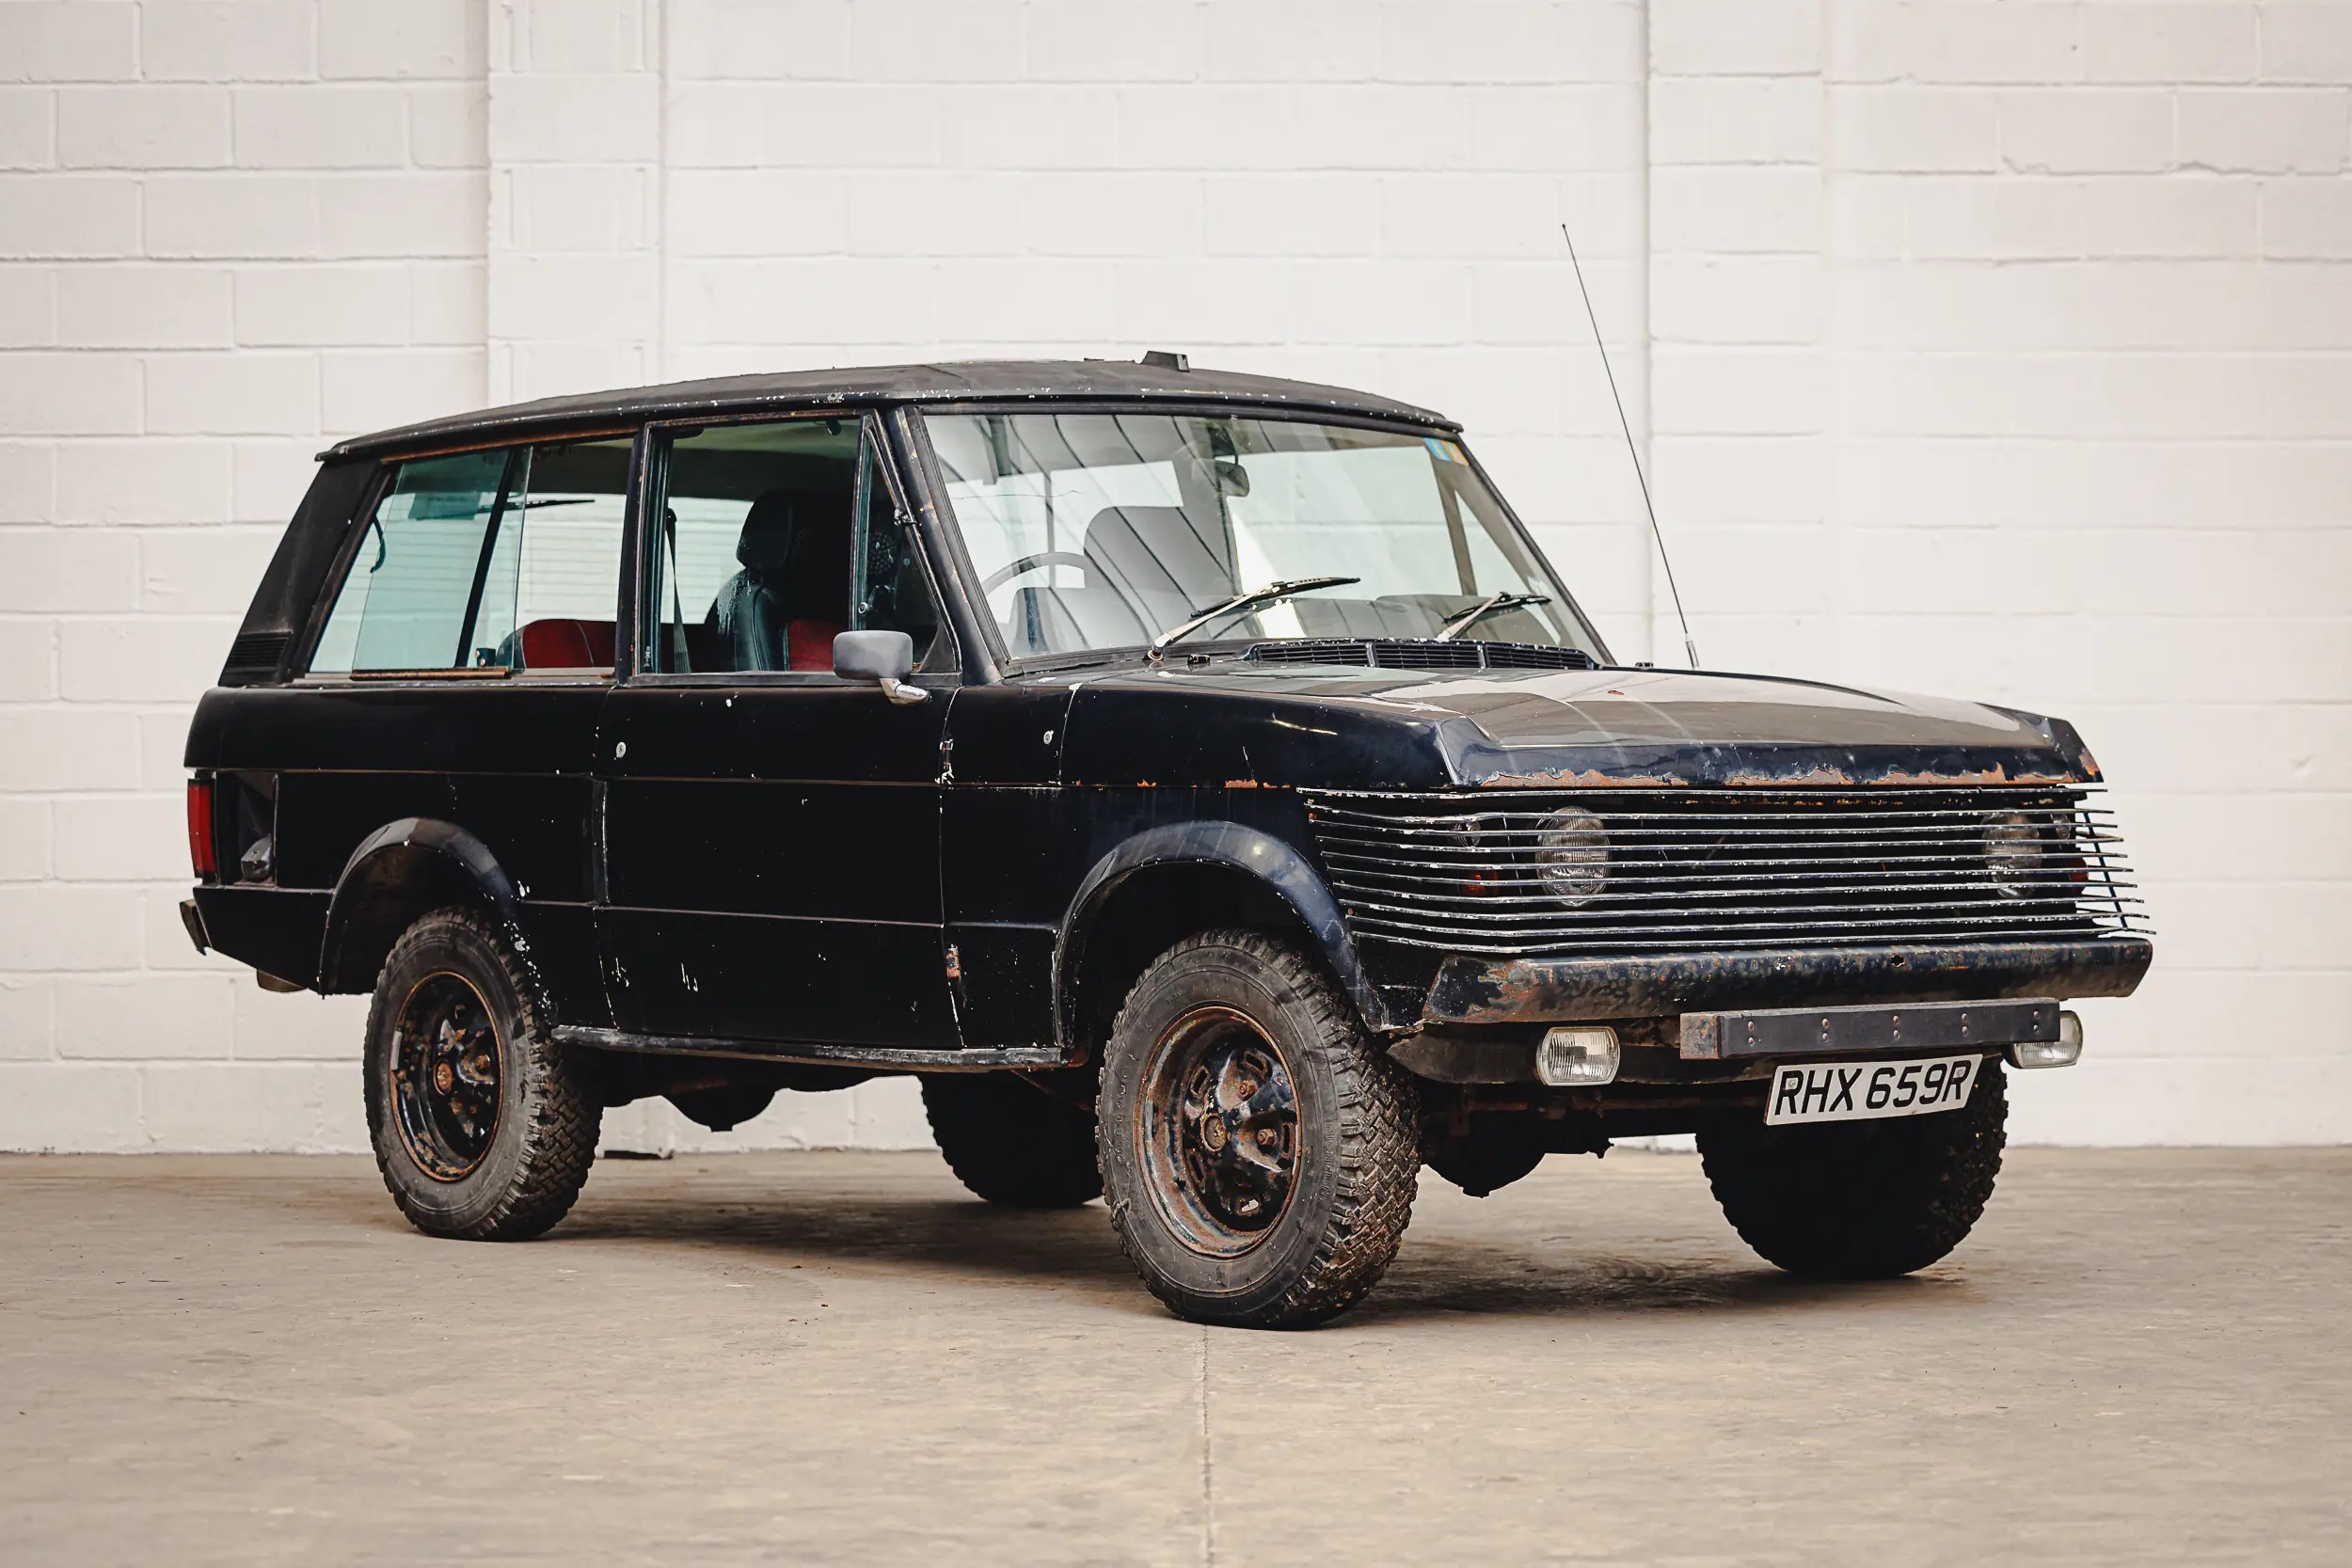 This Wood & Pickett Range Rover Will Take Sheer Guts to Restore